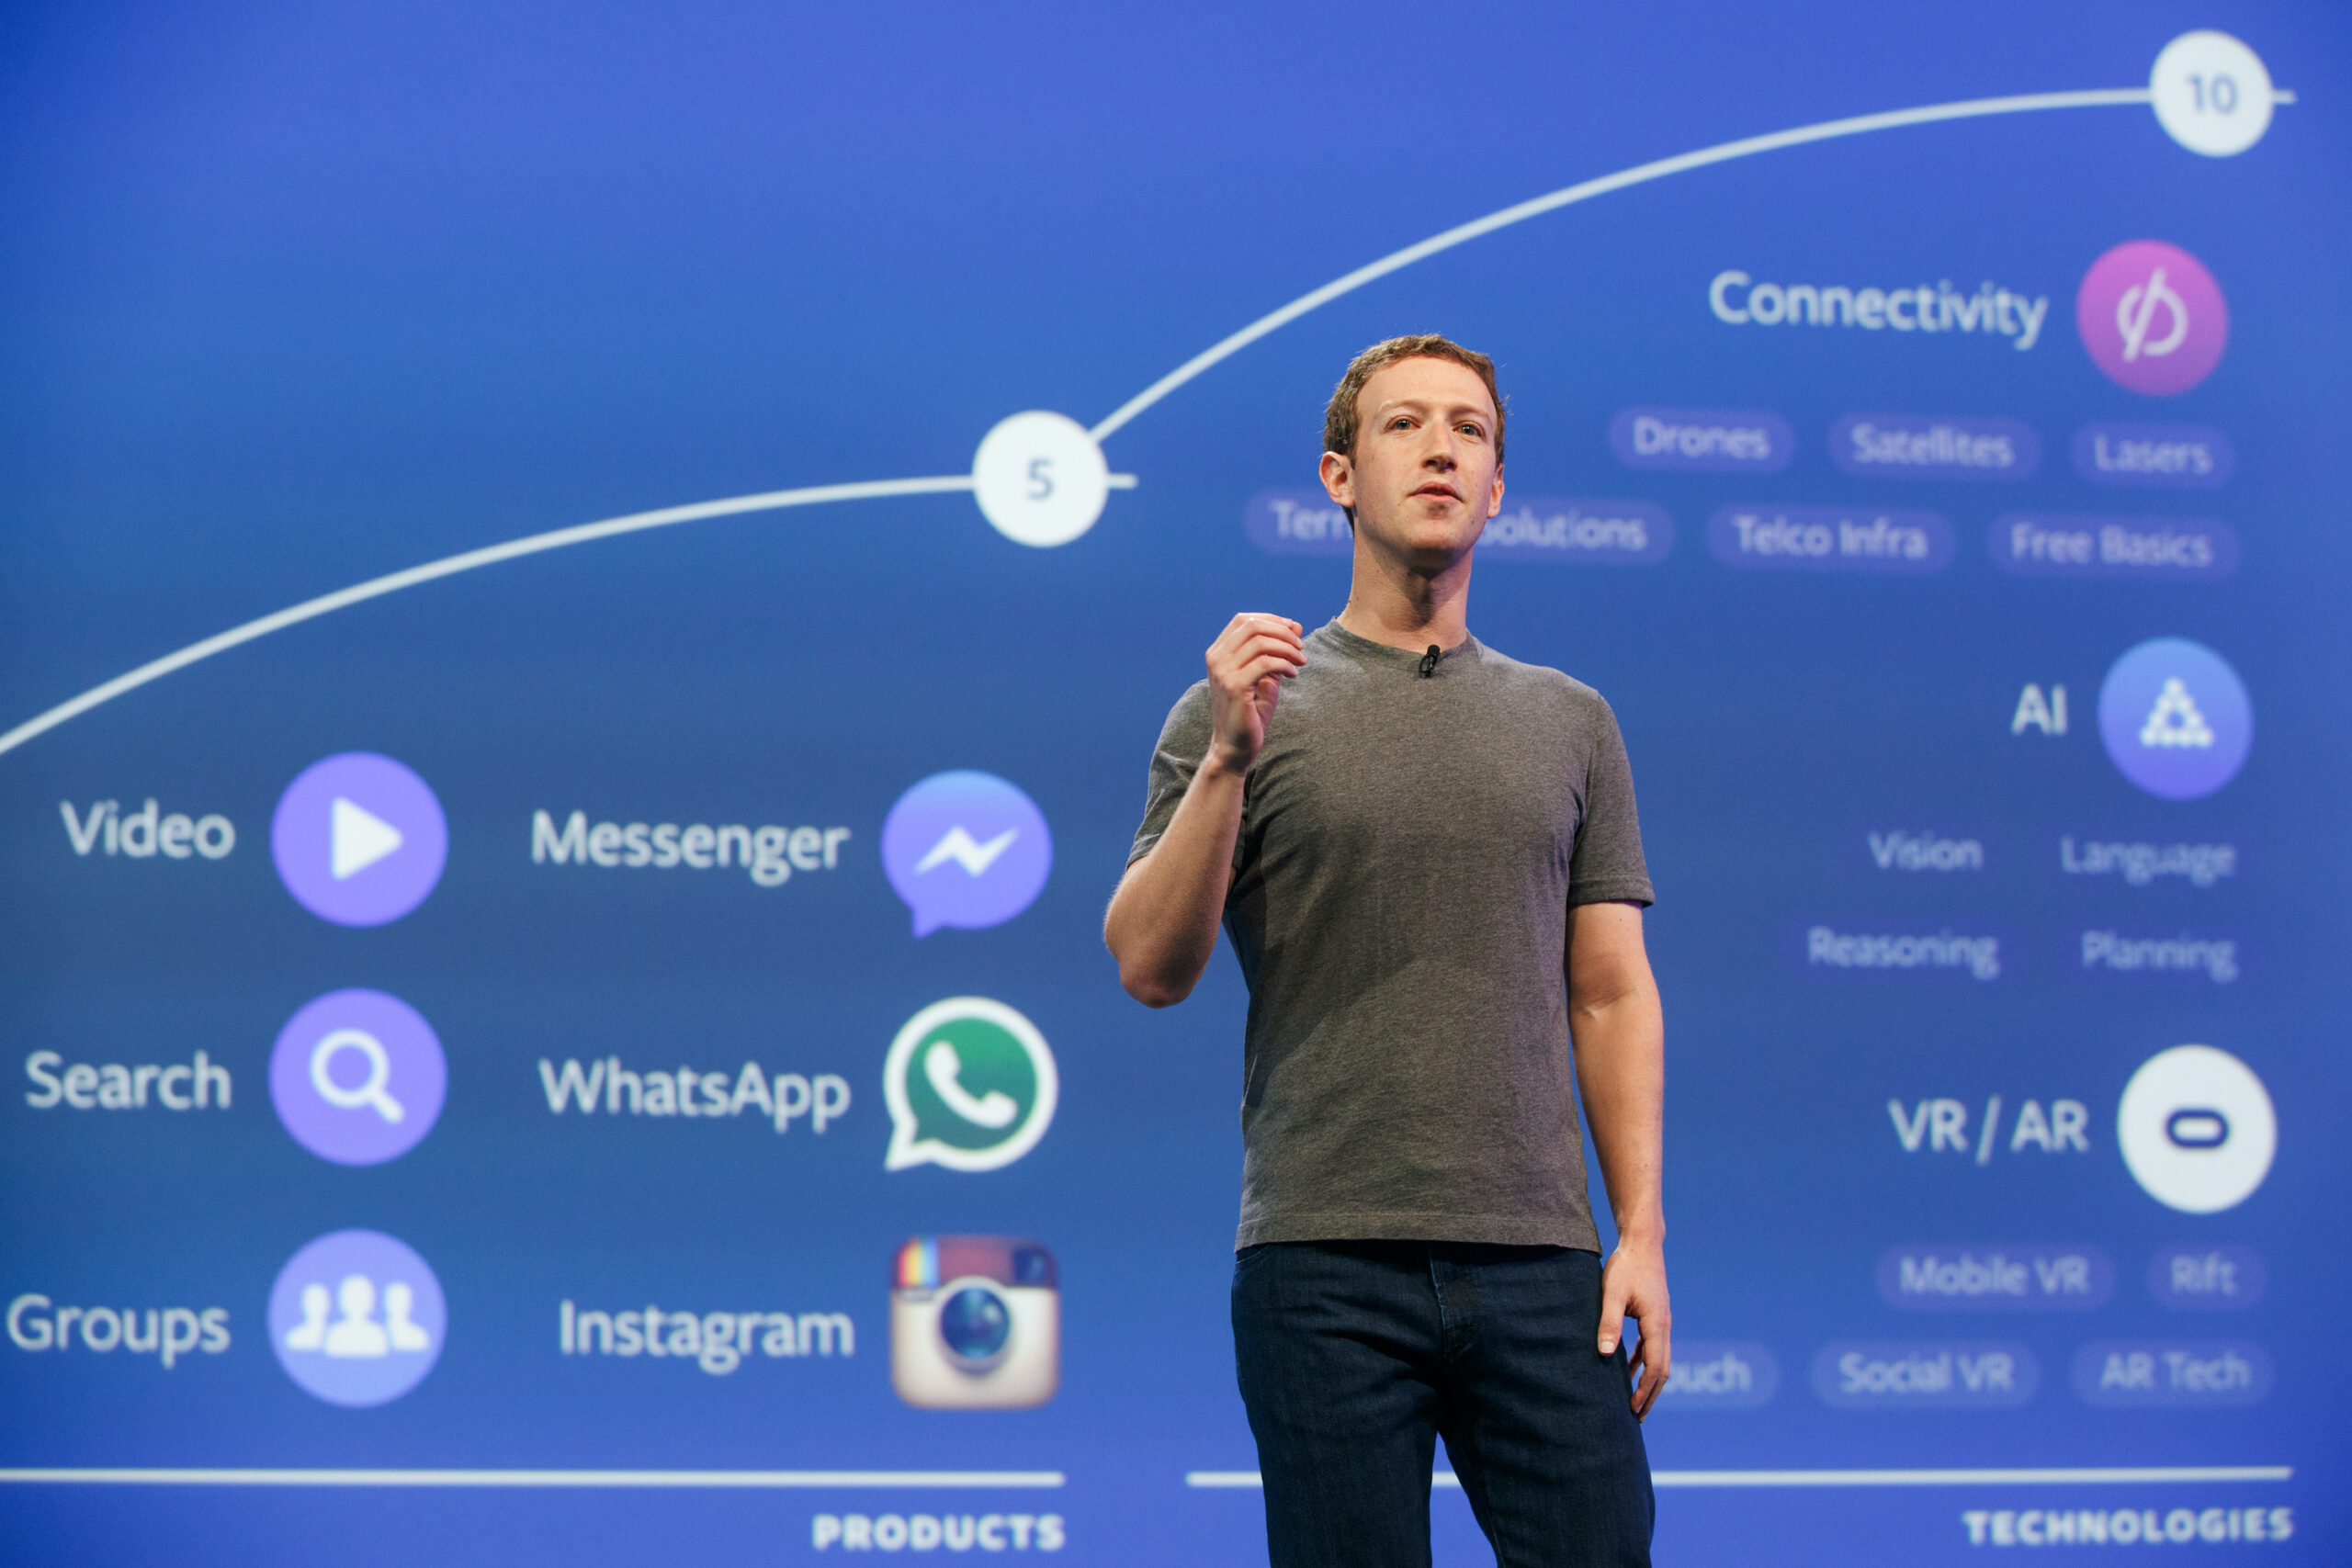 What Mark Zuckerberg thinks about venture capital